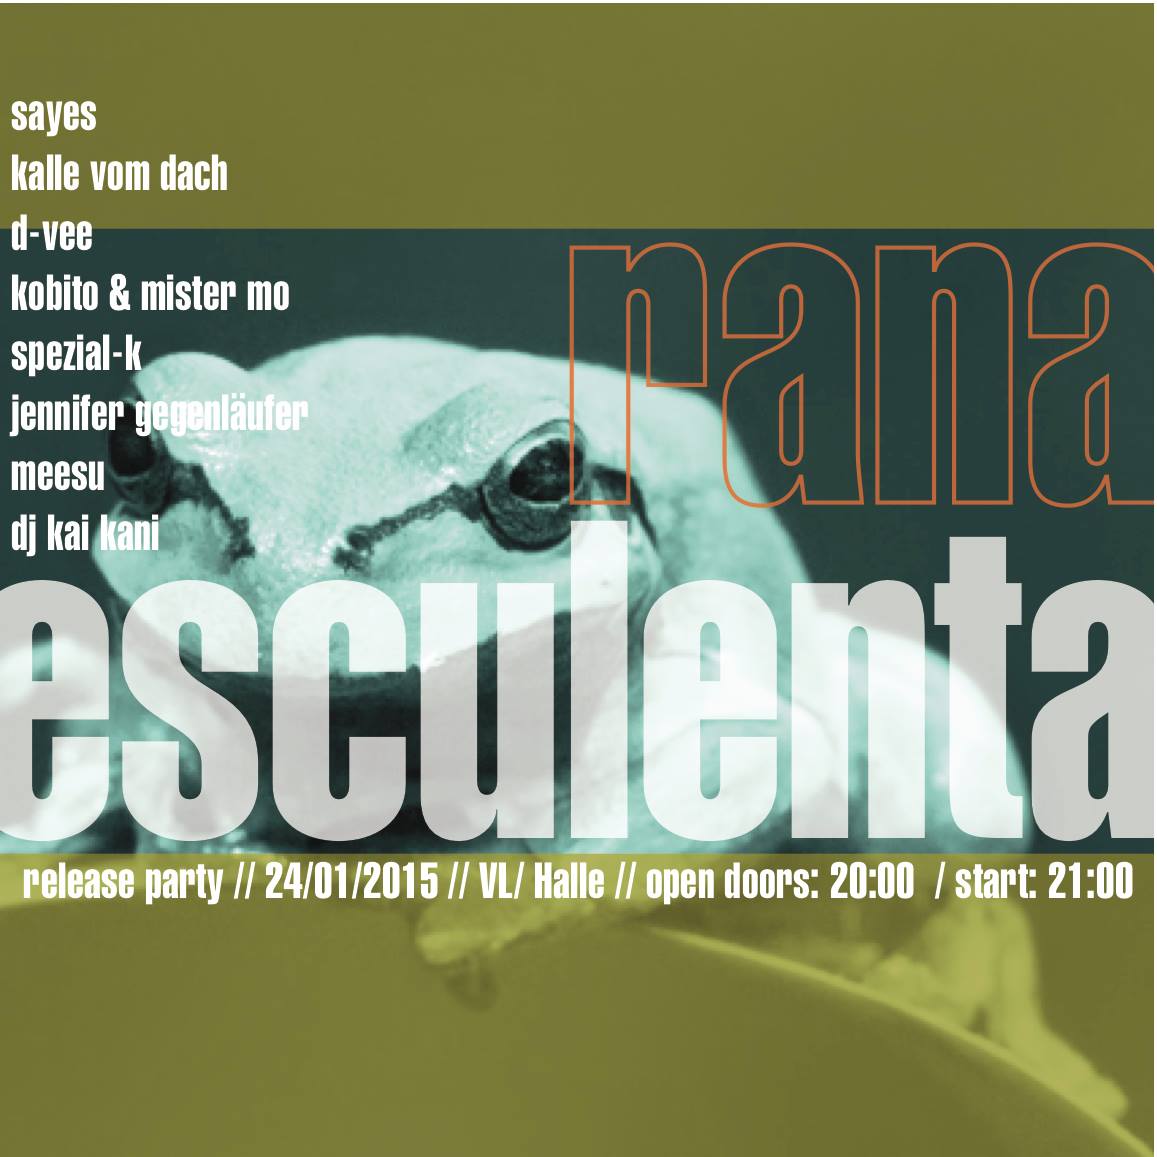 Rana Esculenta Release-Party